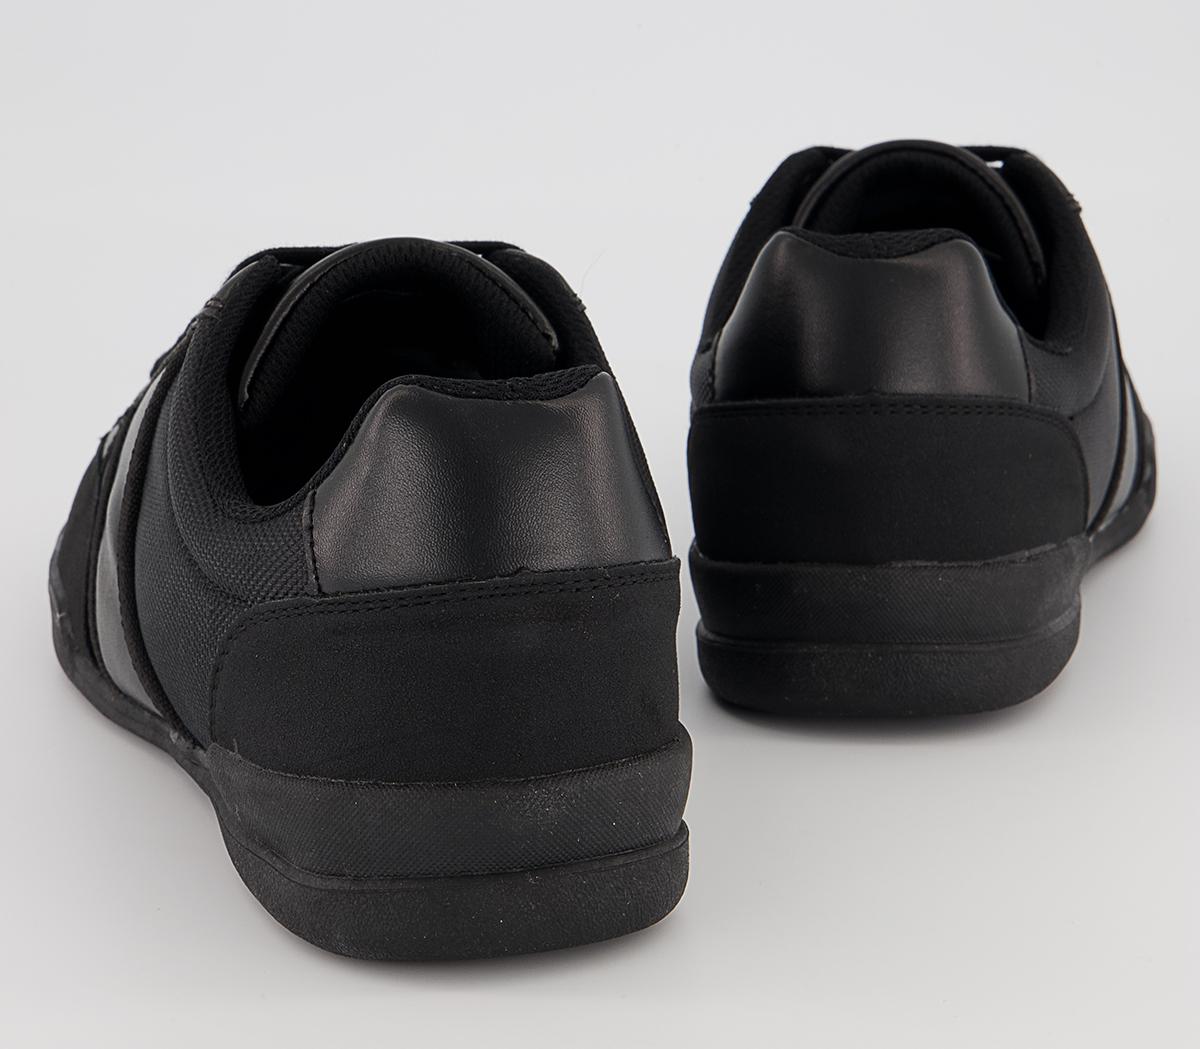 OFFICE Cromer Smart Formal Sneakers Black - Men's Casual Shoes